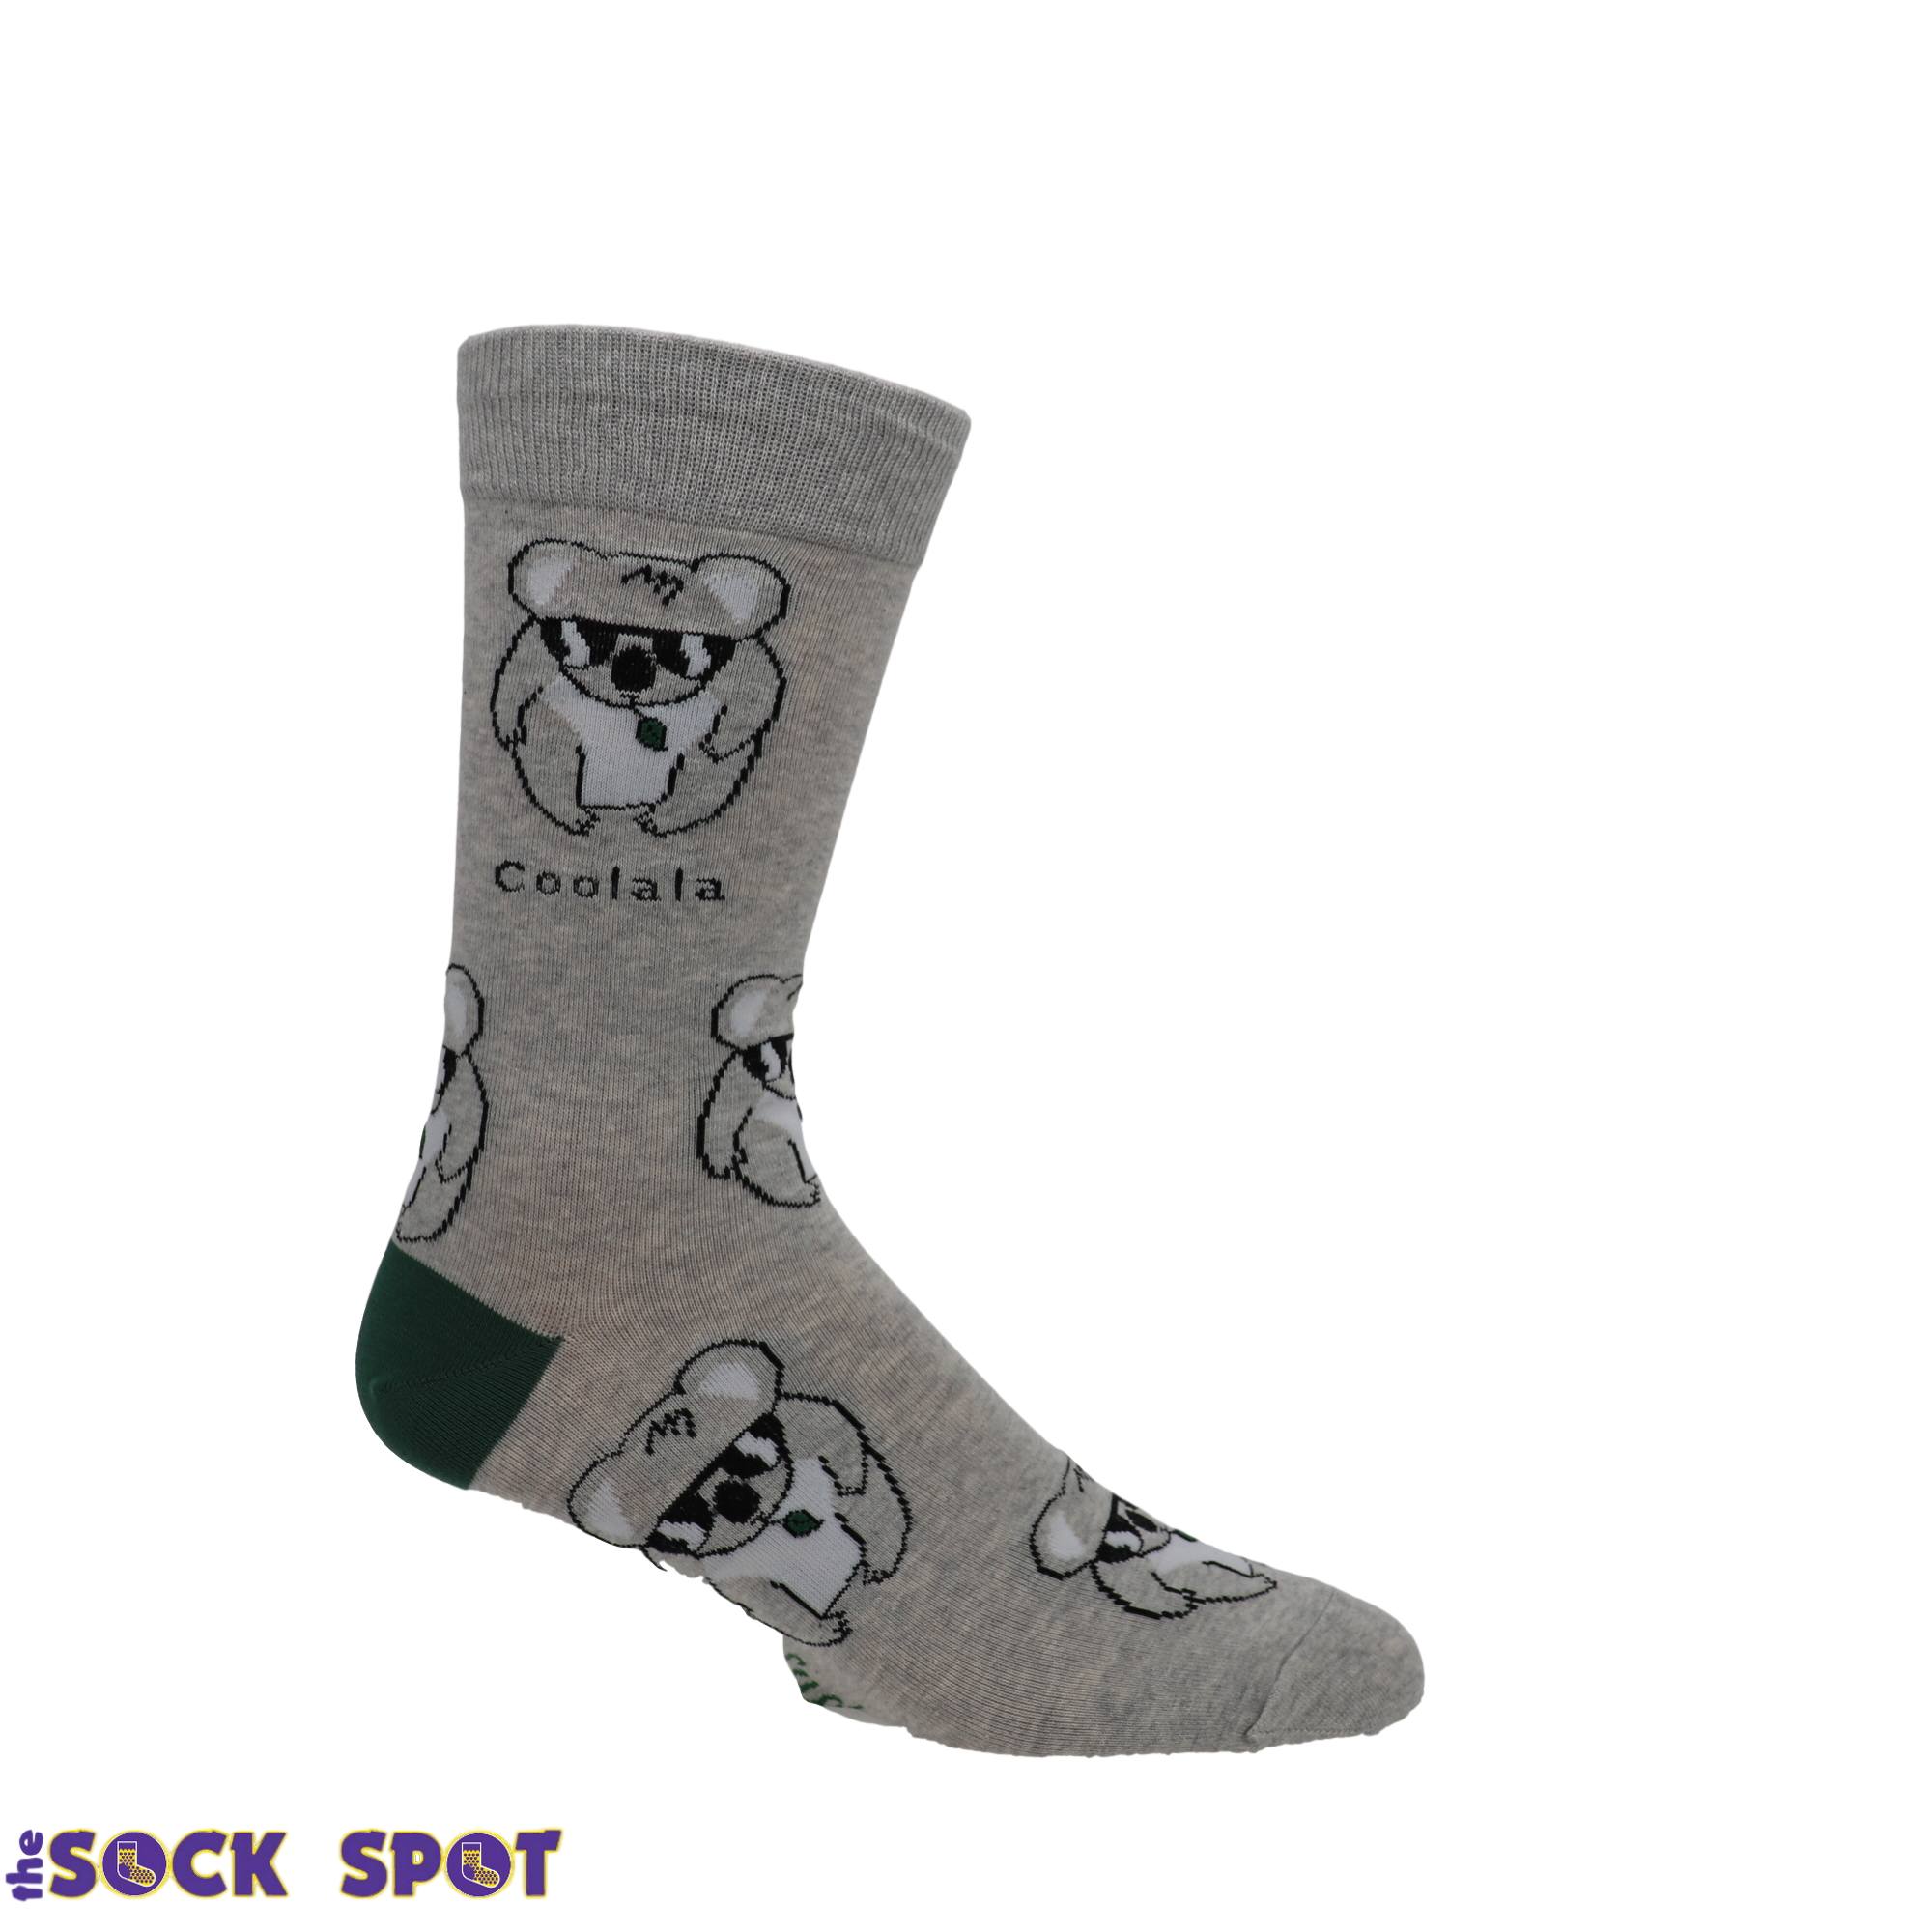 Coolala Koala Socks by Good Luck Sock